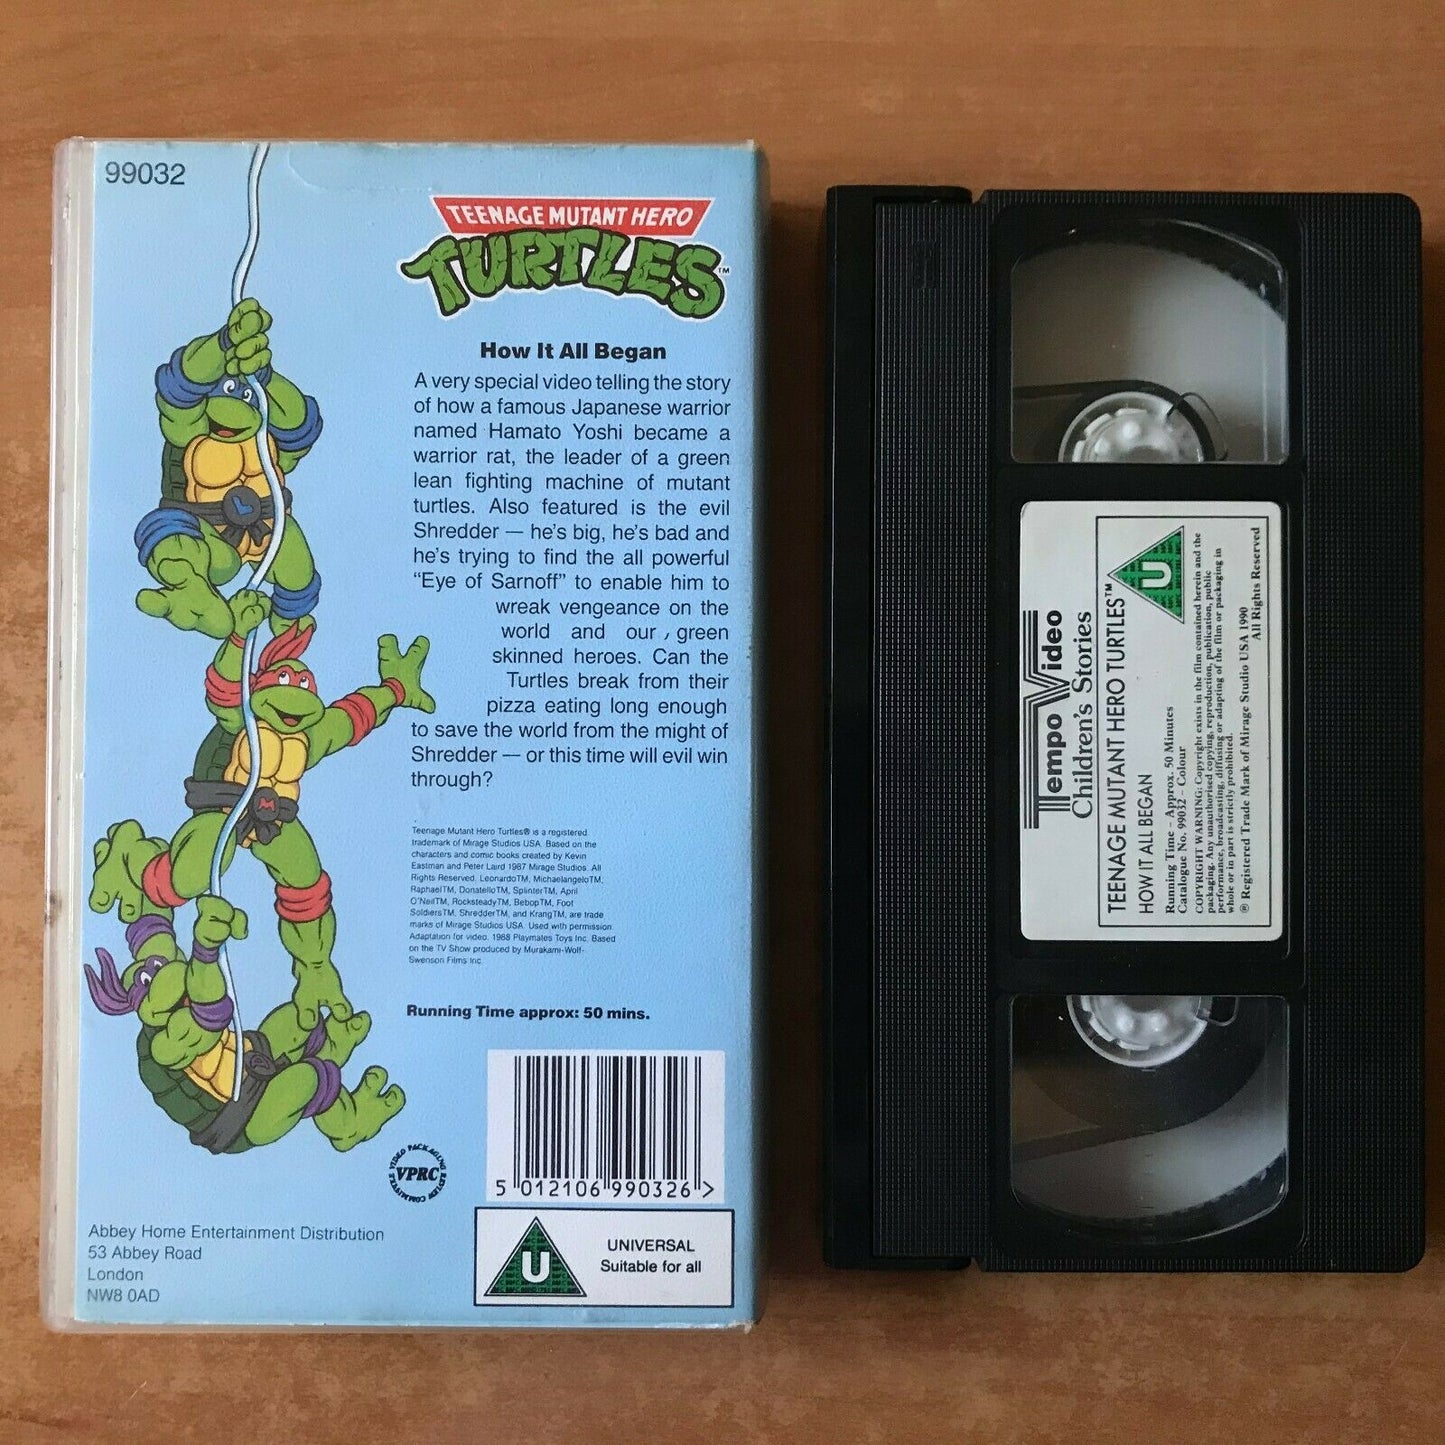 Teenage Mutant Hero Turtles: How It All Began [Tempo Video] Children's - Pal VHS-